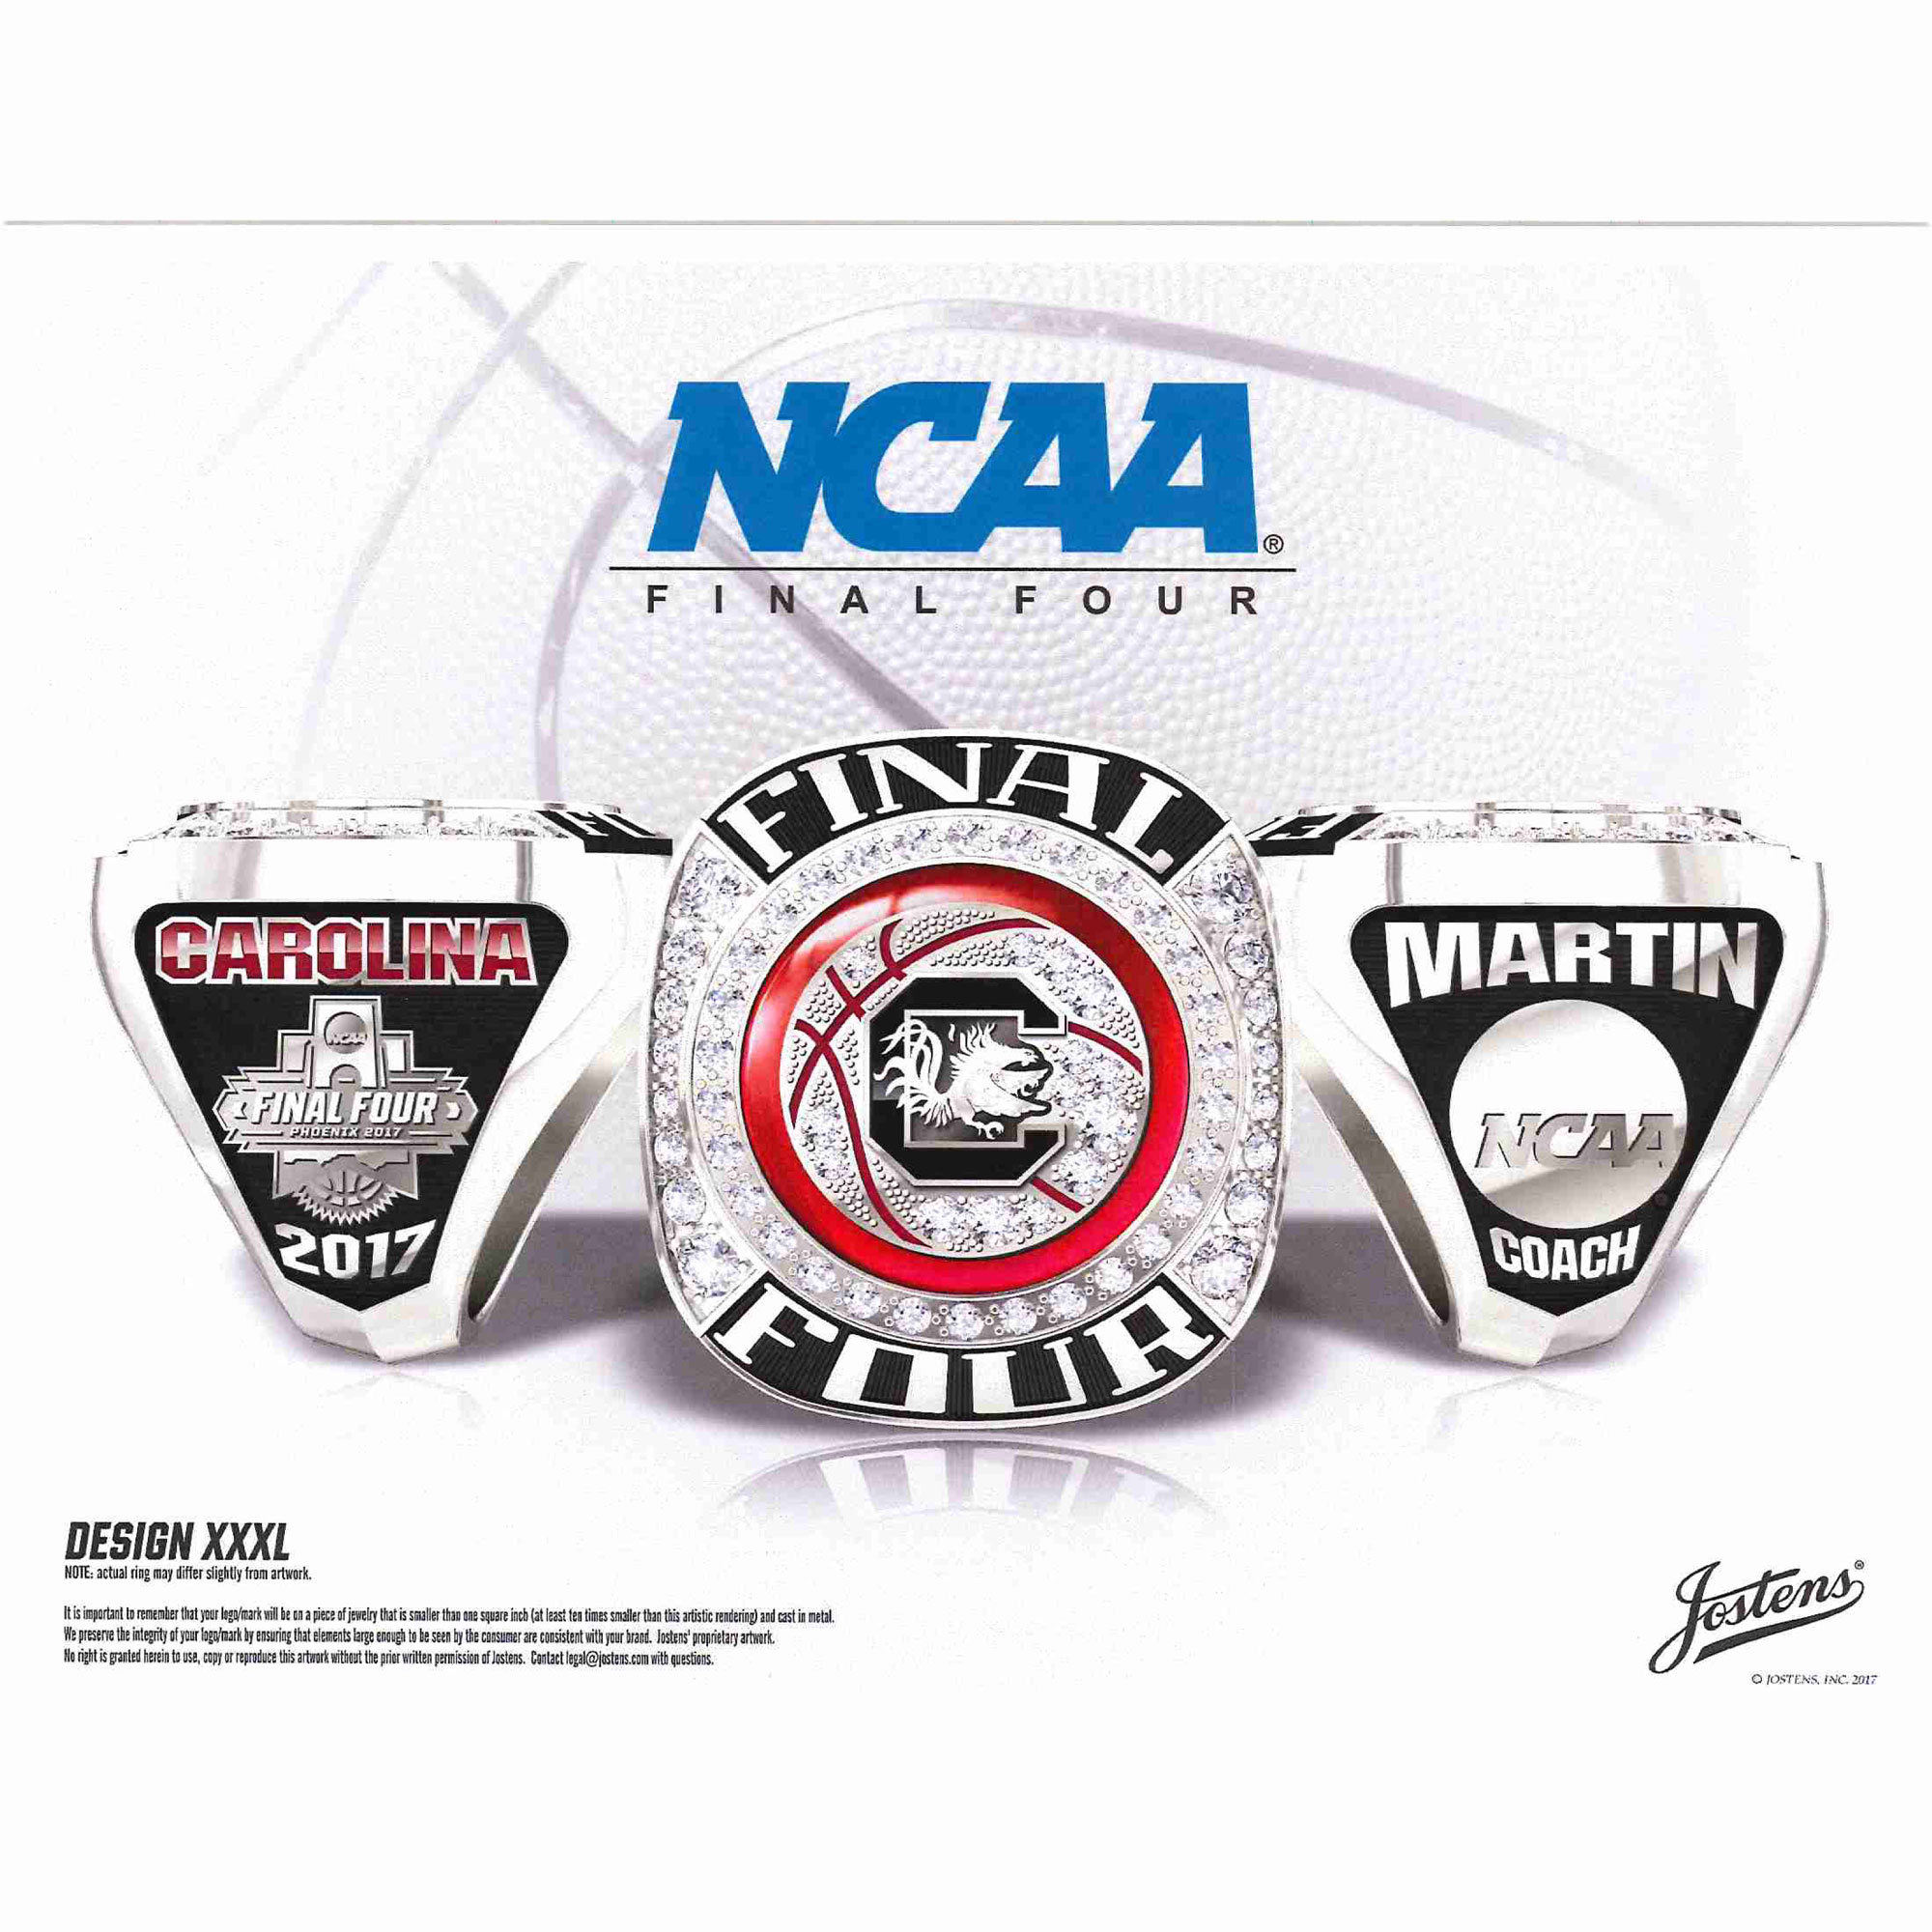 University of South Carolina Men's Basketball 2017 Final Four Championship Ring